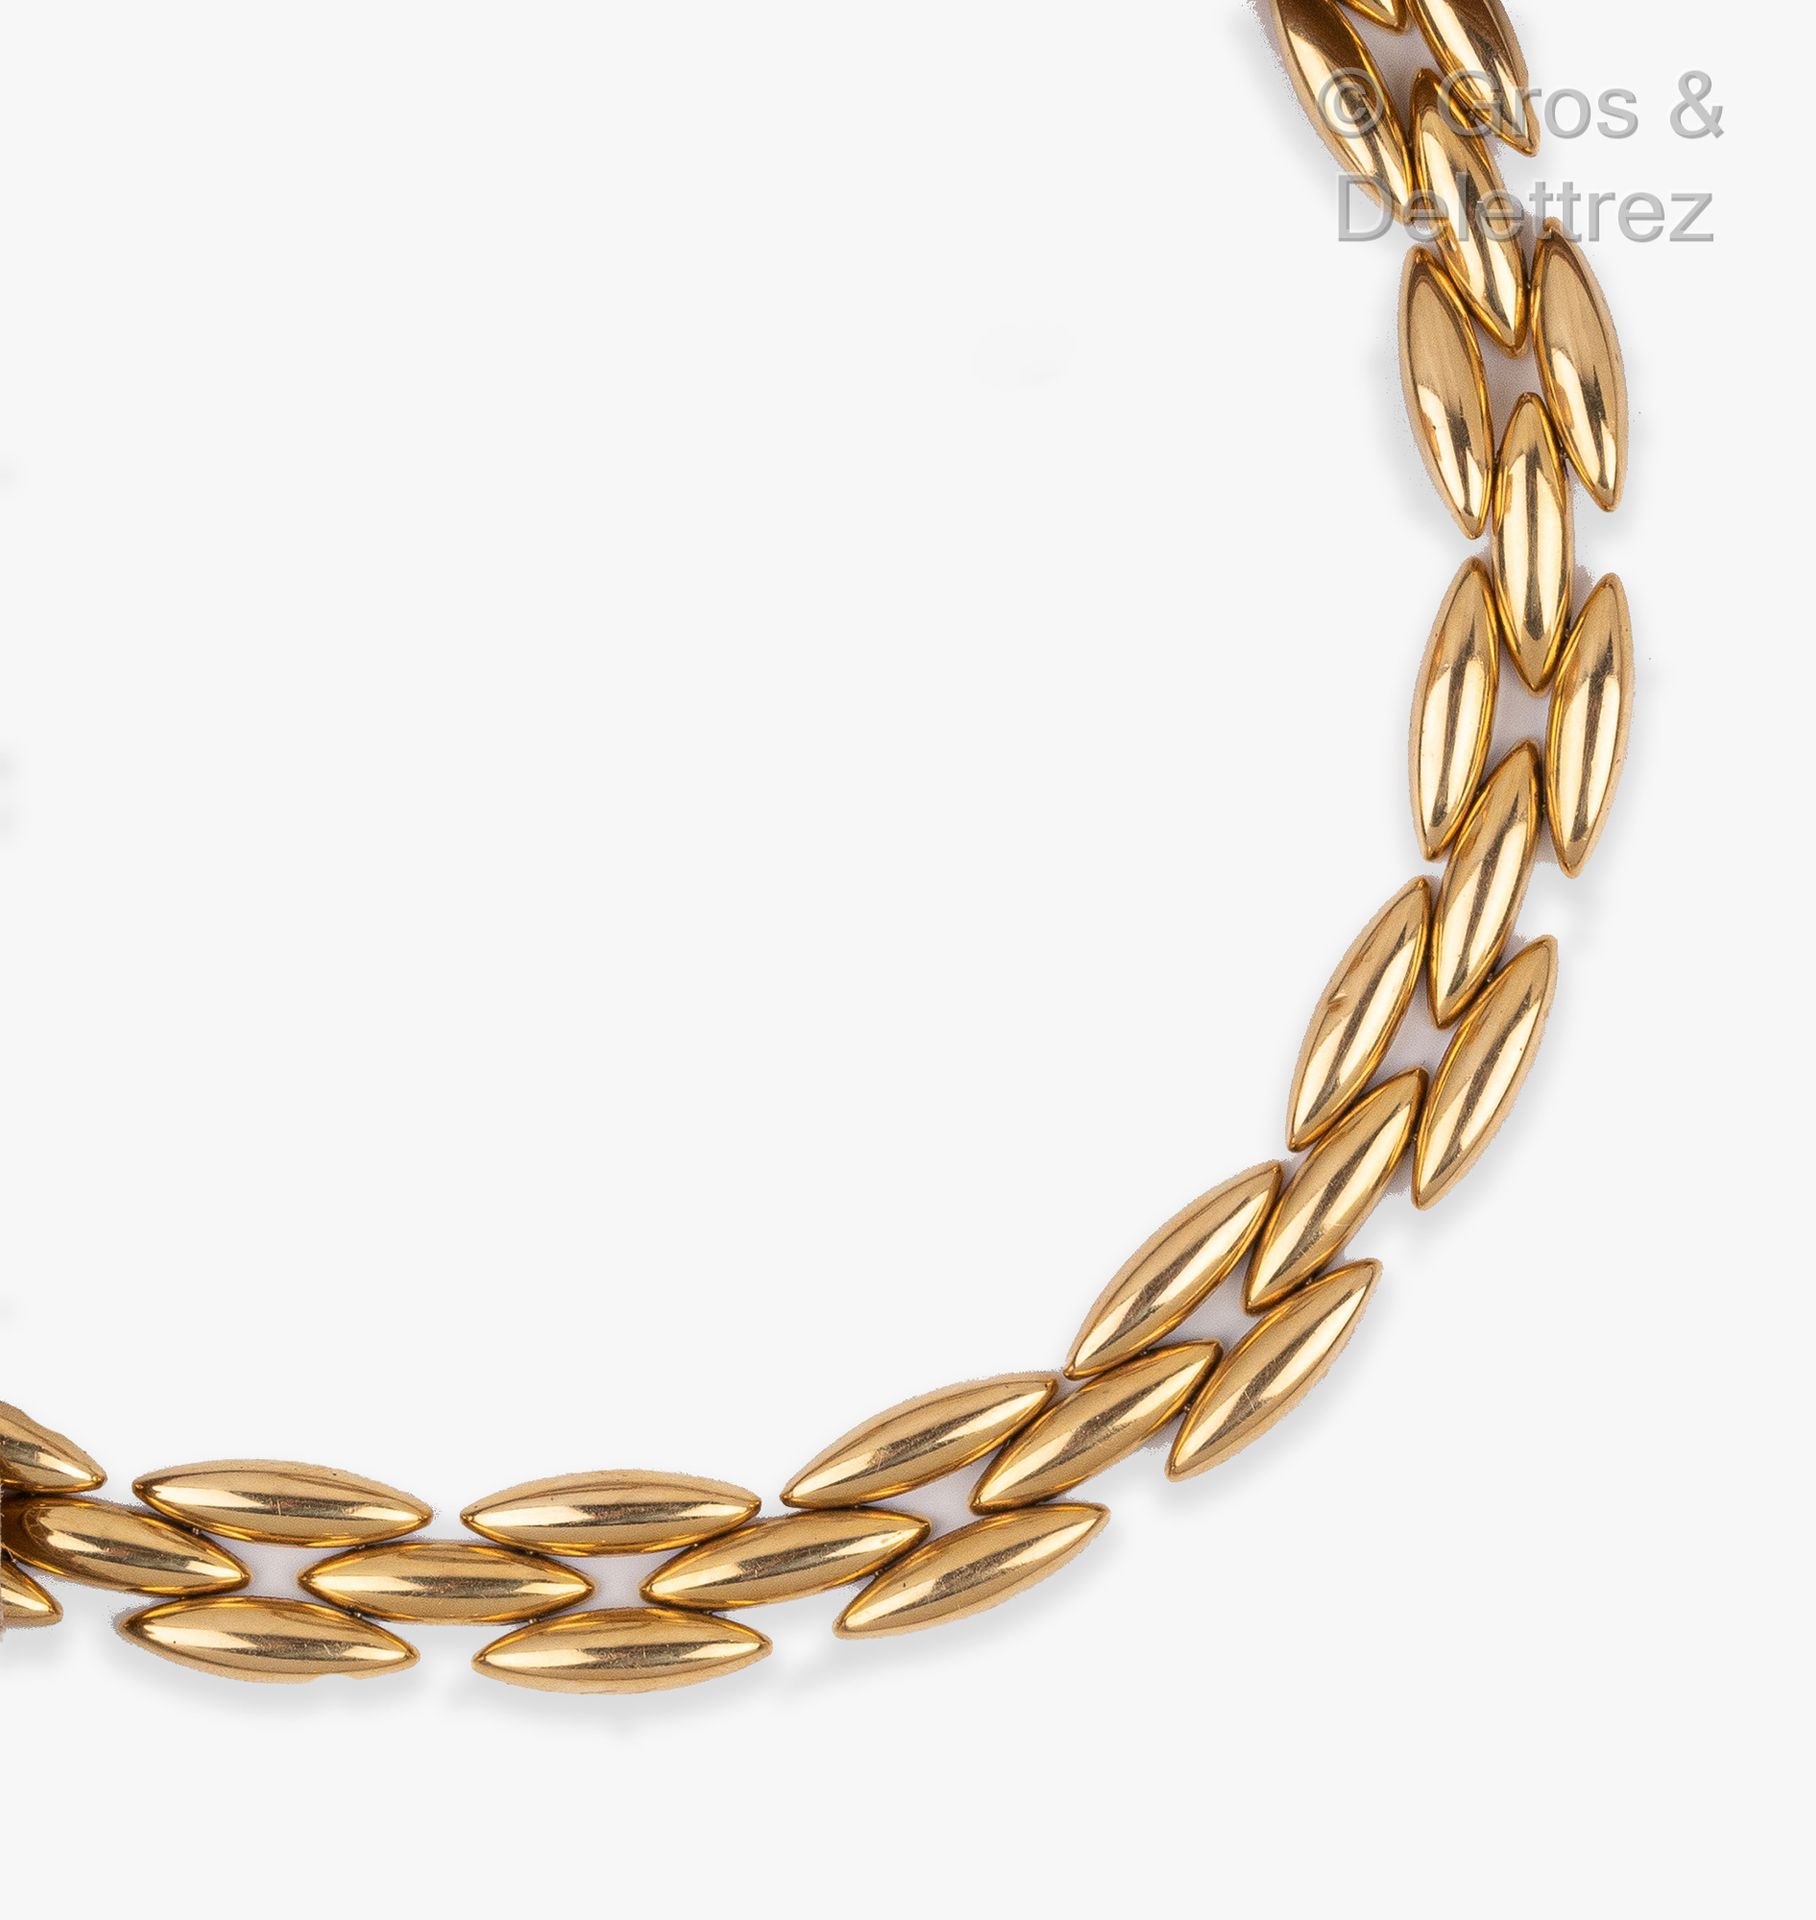 Null 卡地亚 - "Gentiane" - 长方形链接的黄金铰接式项链。签有卡地亚并有编号。长度：39厘米。D. 52.4克。